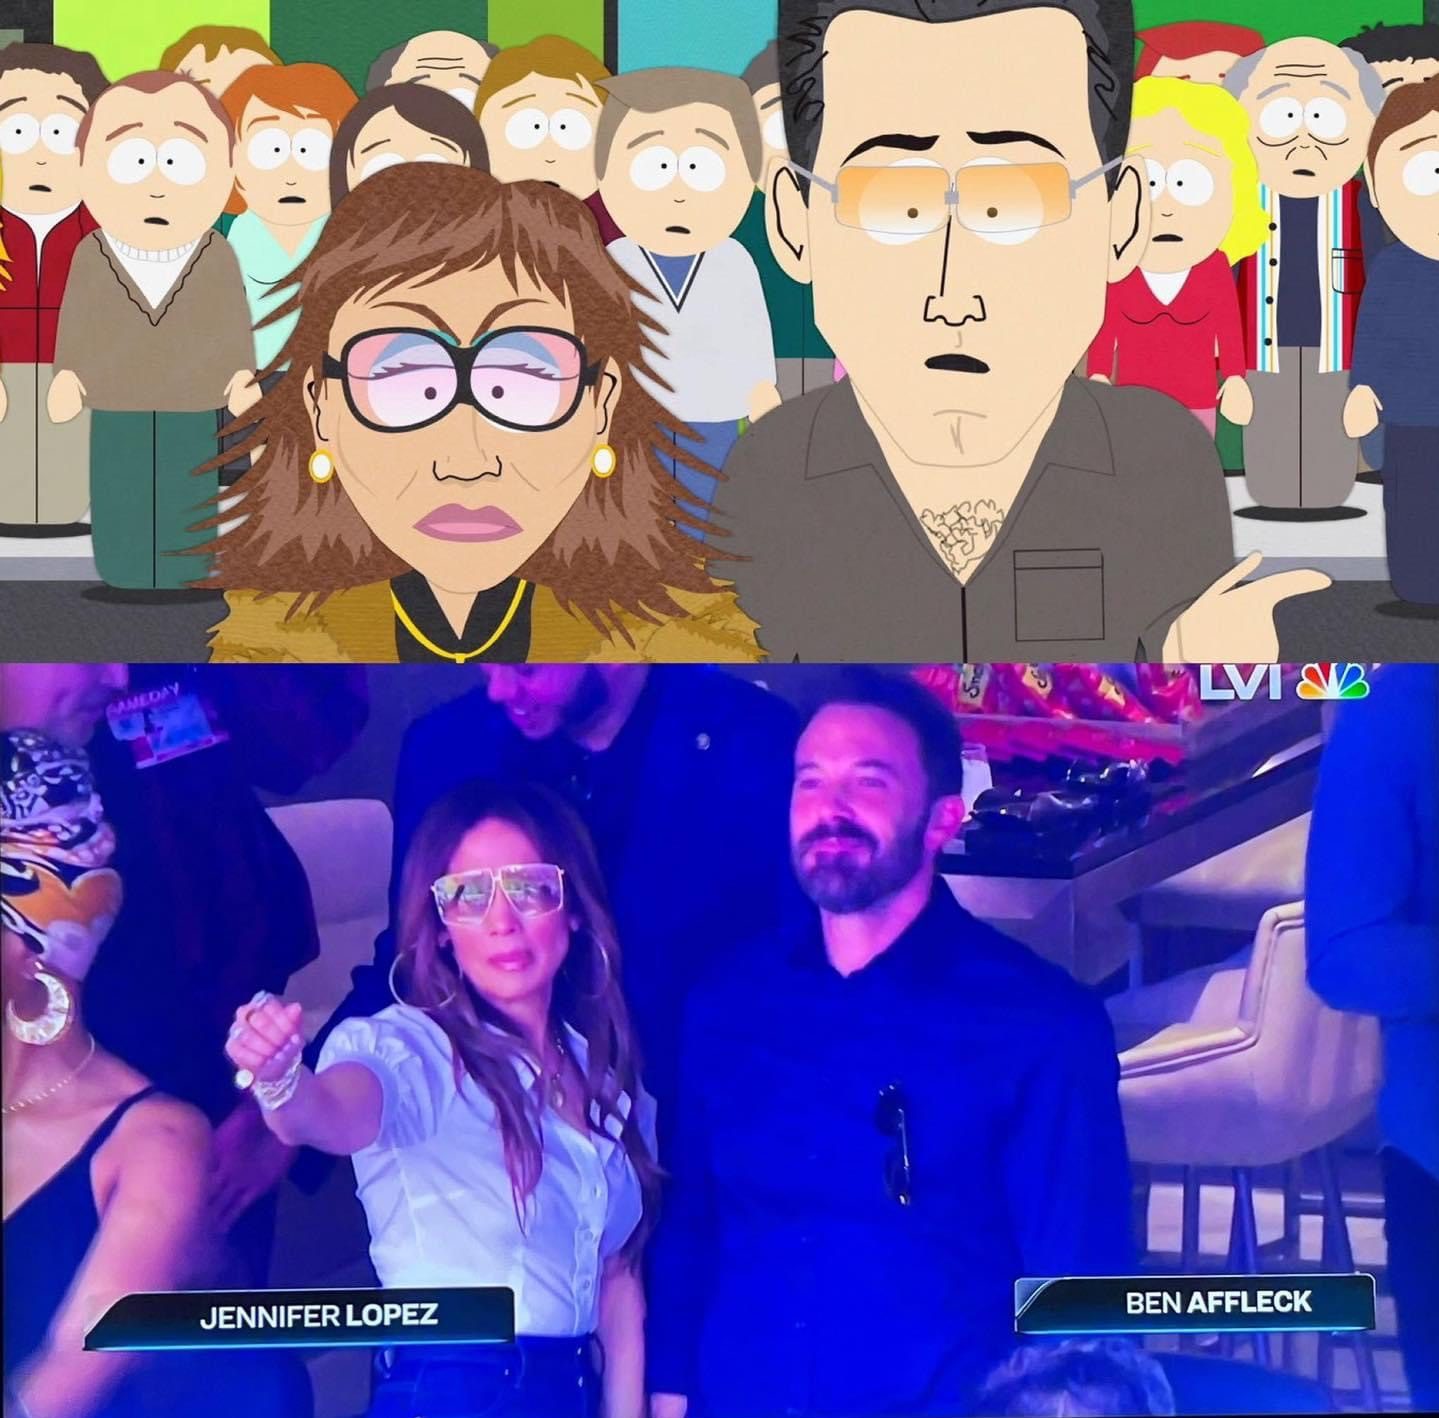 Jennifer Lopez & Ben Affleck South Park meme